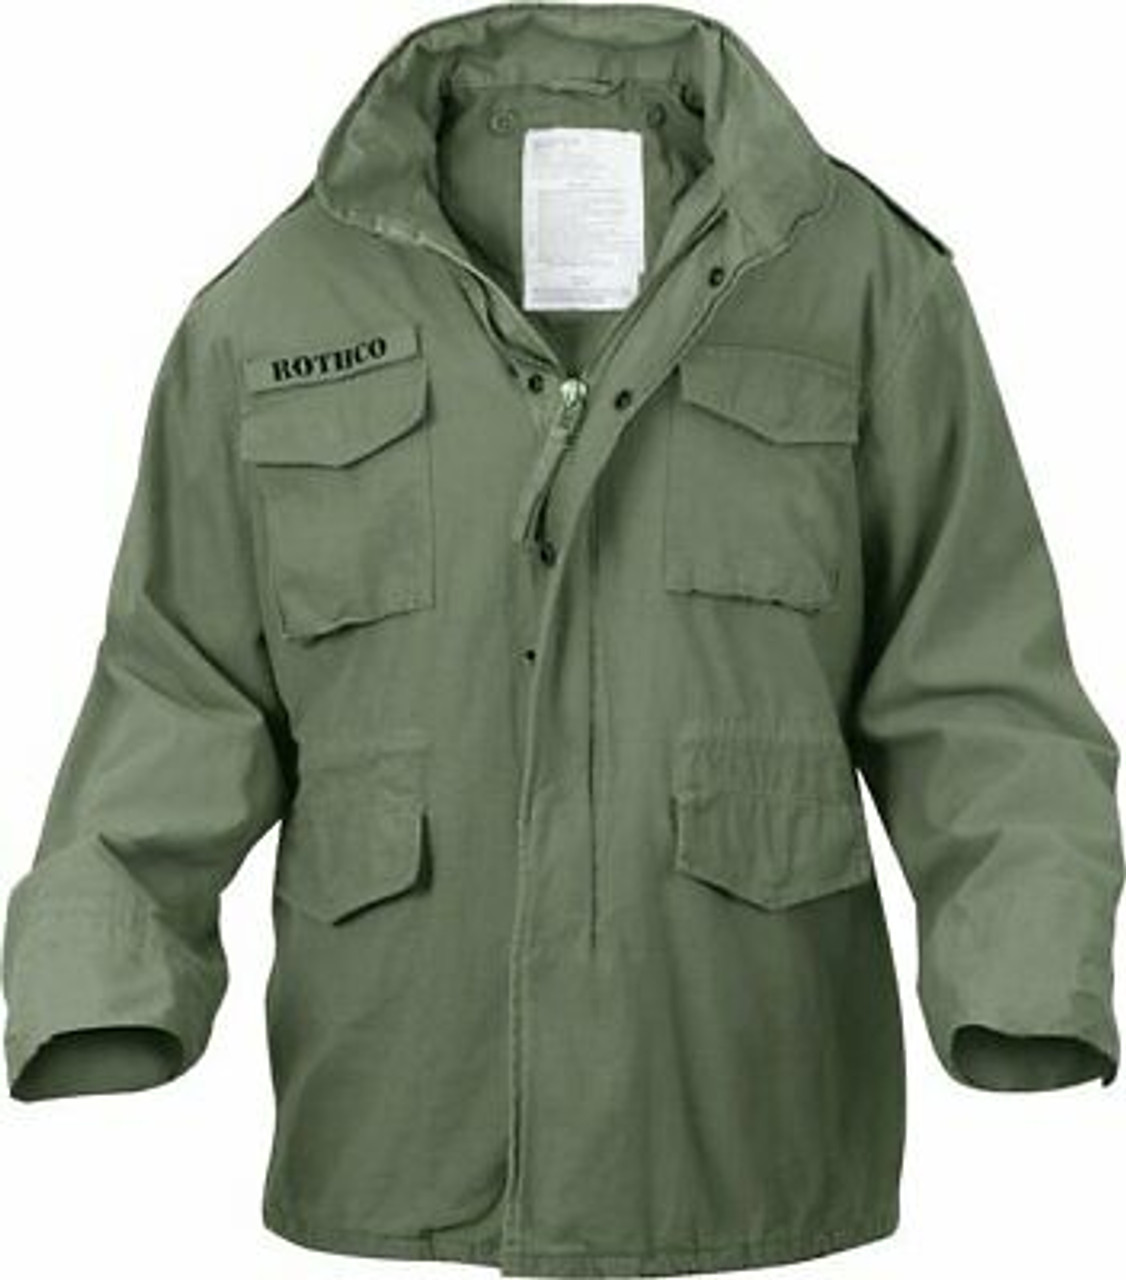 M 65 купить. Rothco field Jacket m65. Куртка Vintage m-65 Rothco Olive. Куртка us Army m65. Rothco - m-65 field Jacket wliner - Olive Drab.